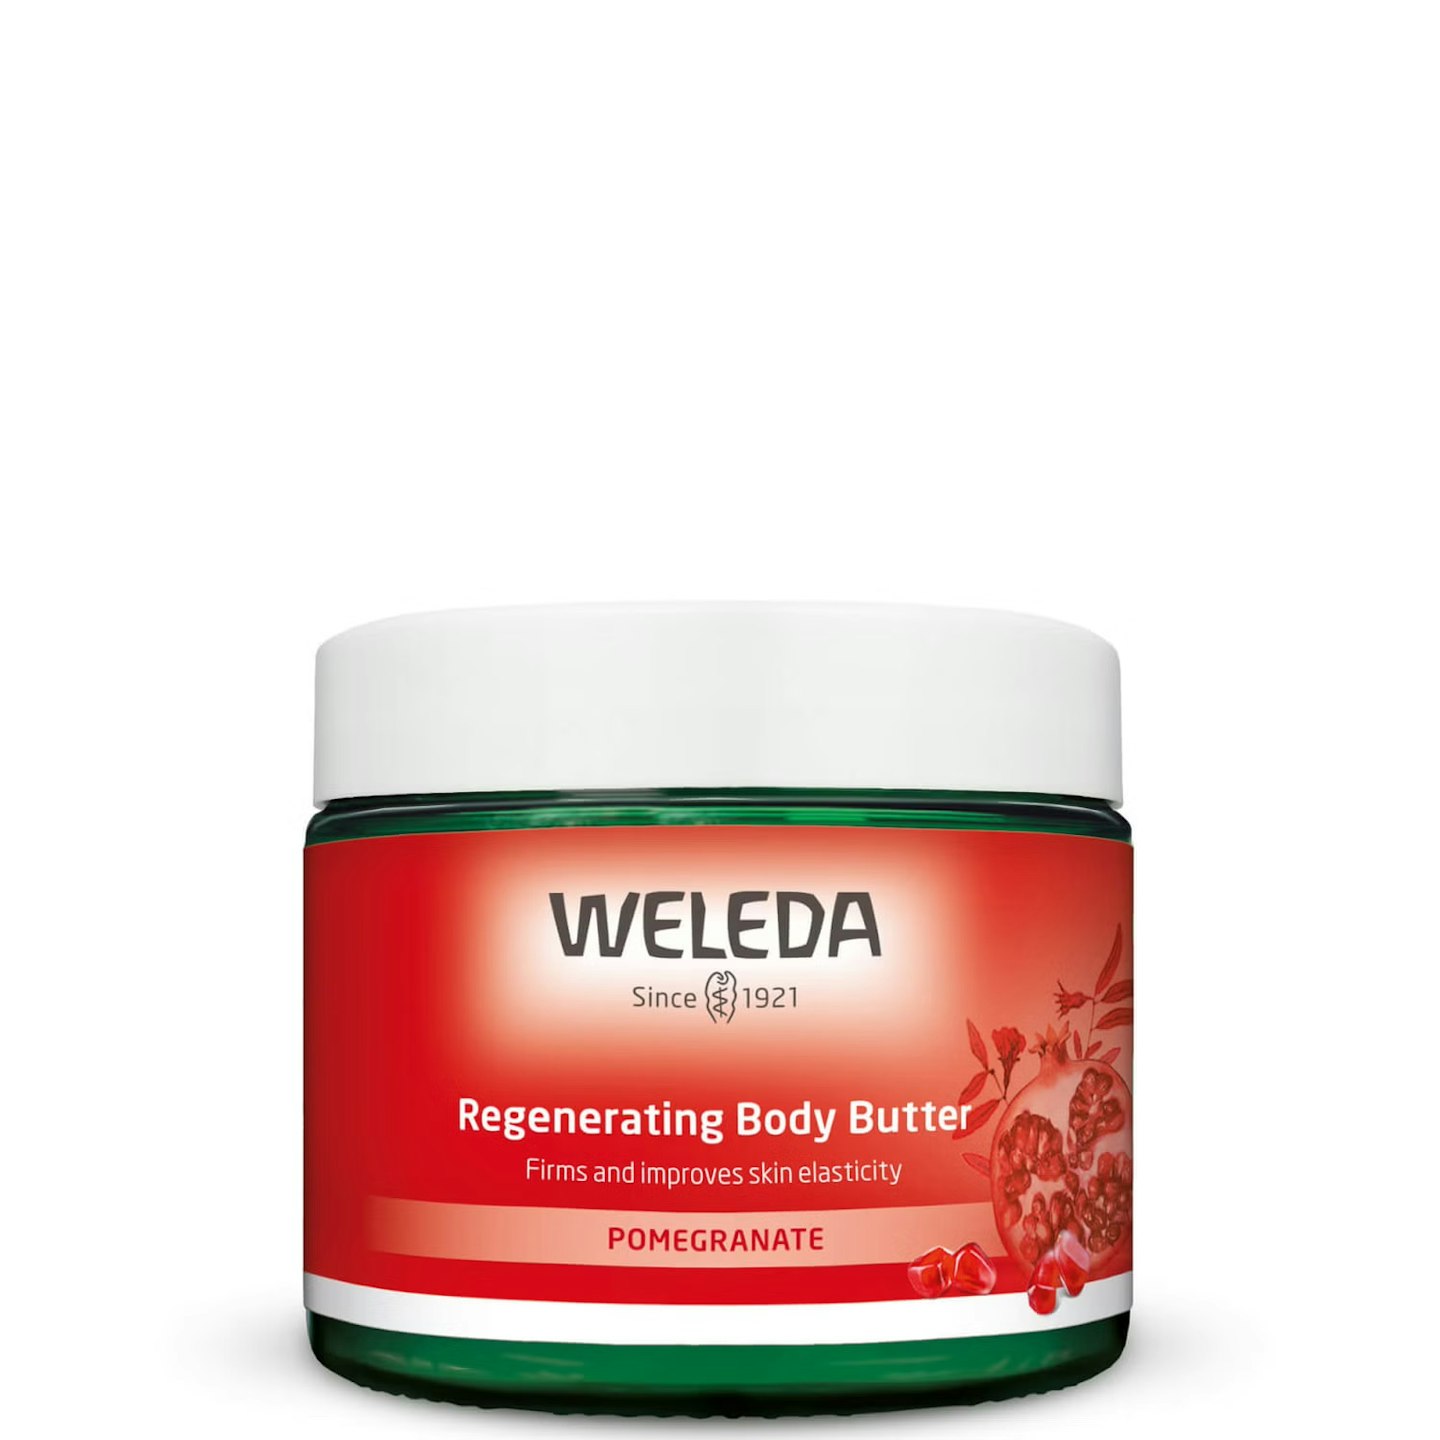 Weleda Pomegranate Regenerating Body Butter